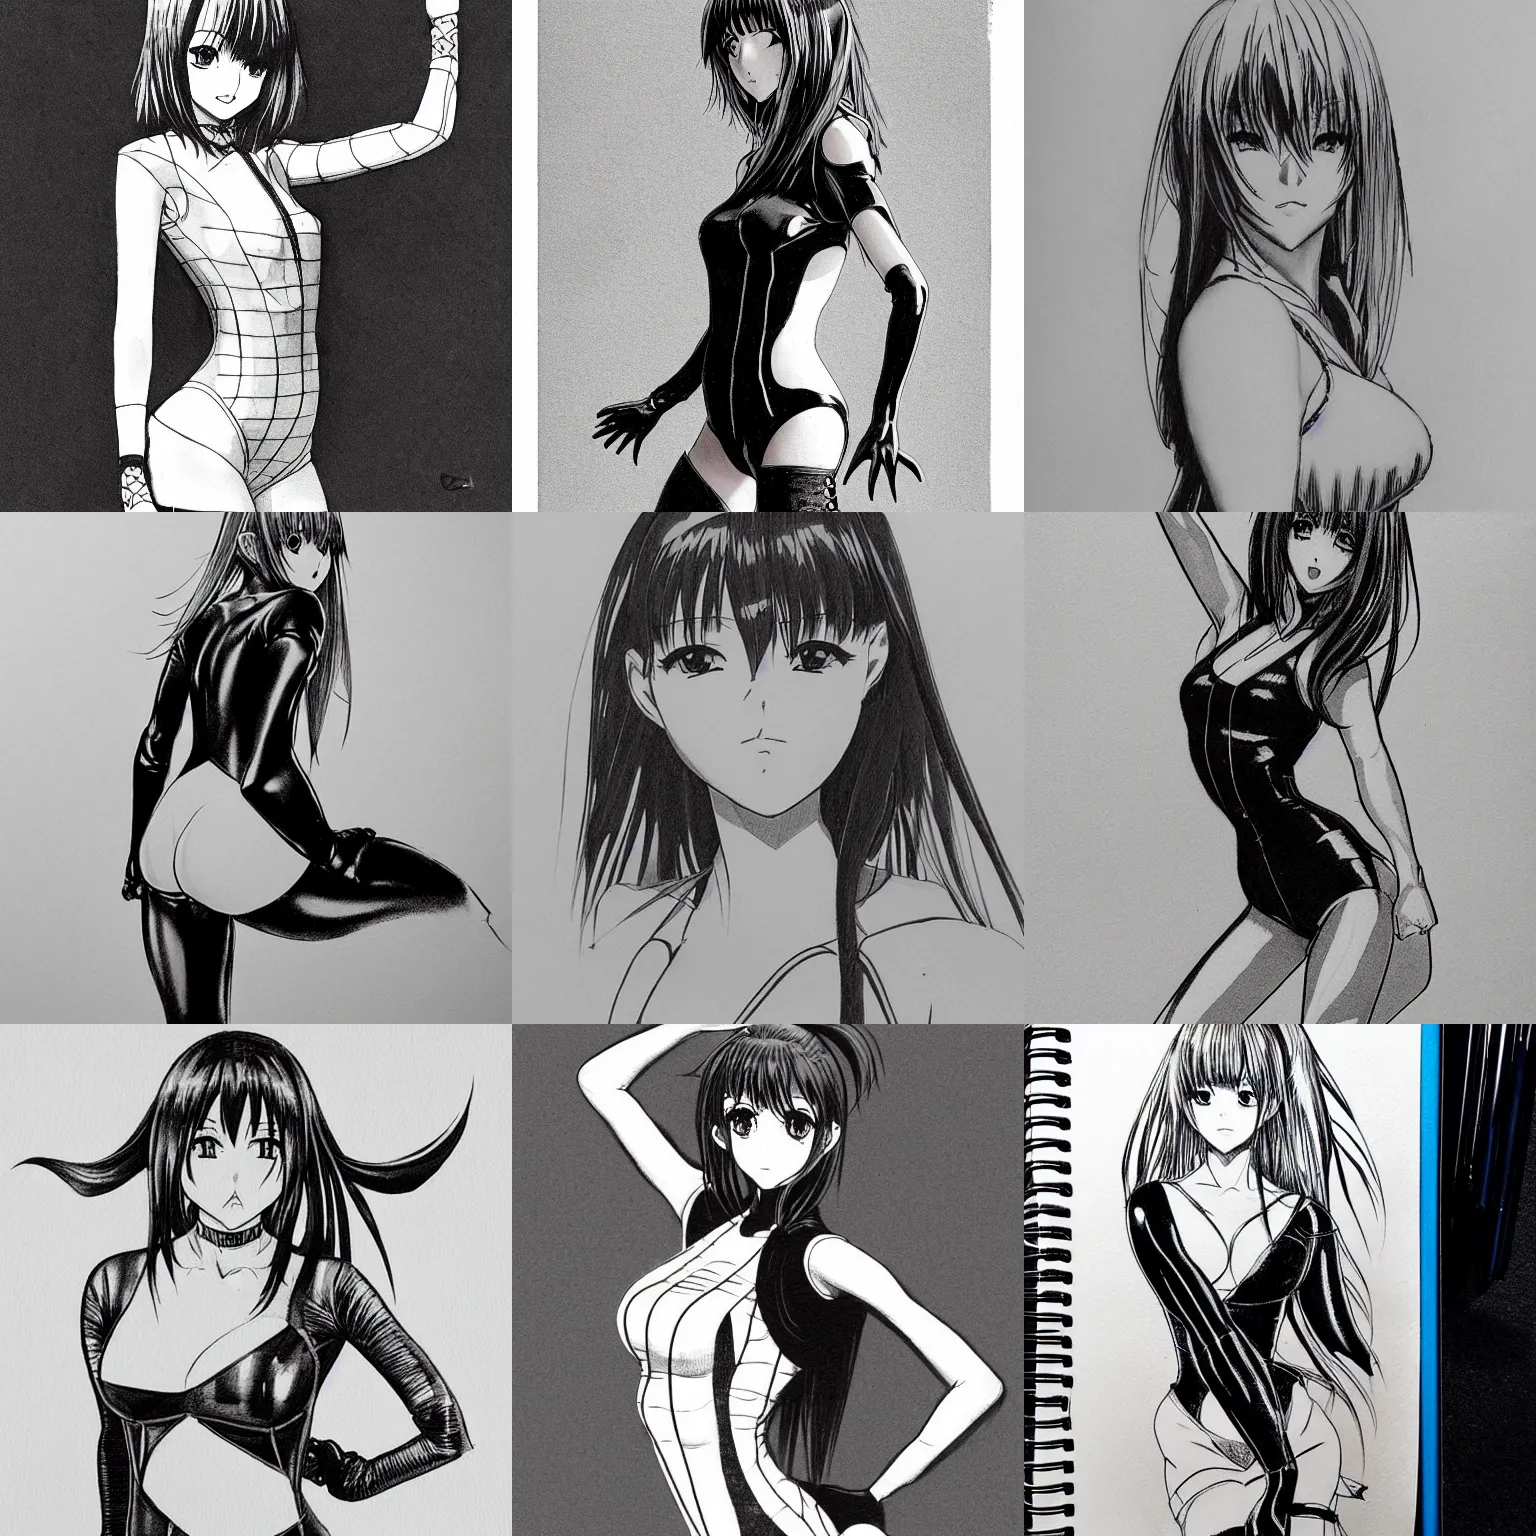 Убитое Время on X: Drawn from Maniken's anime #anime #art #manga